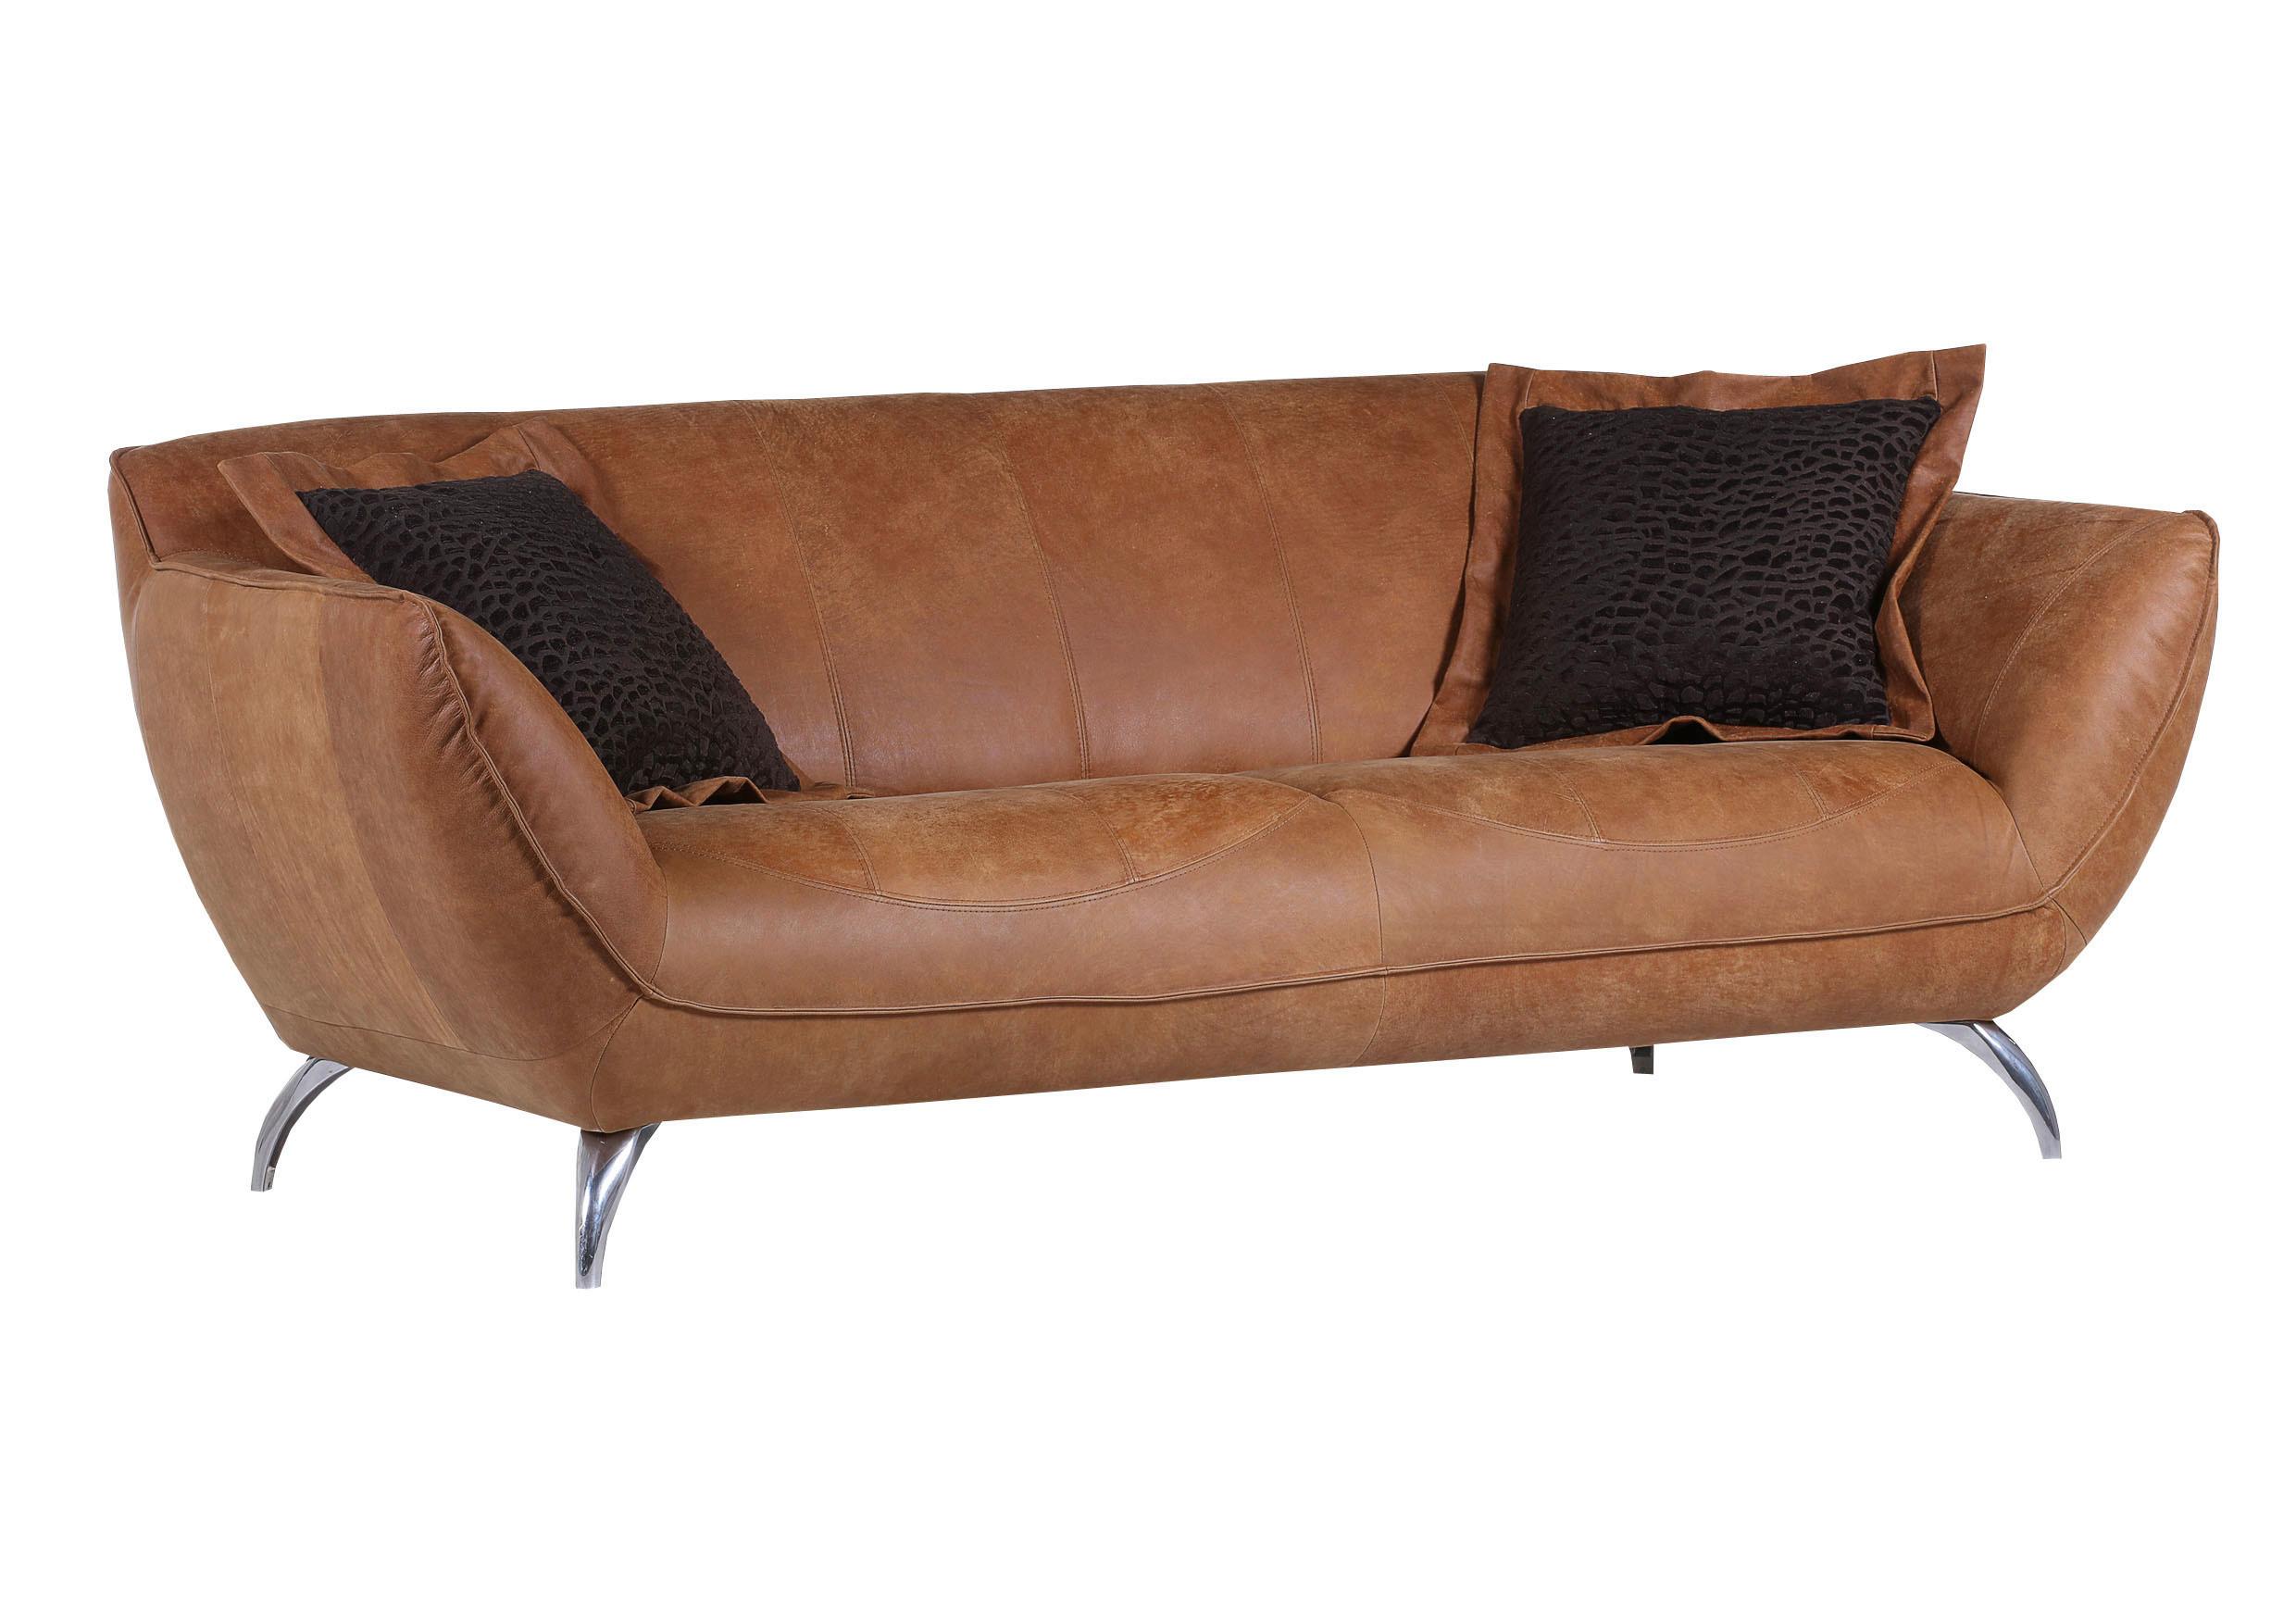 2-Sitzer-Sofa Venezuela aus Echtleder - Hellbraun/Alufarben, Lifestyle, Leder (205/83/45/100cm) - Premium Living